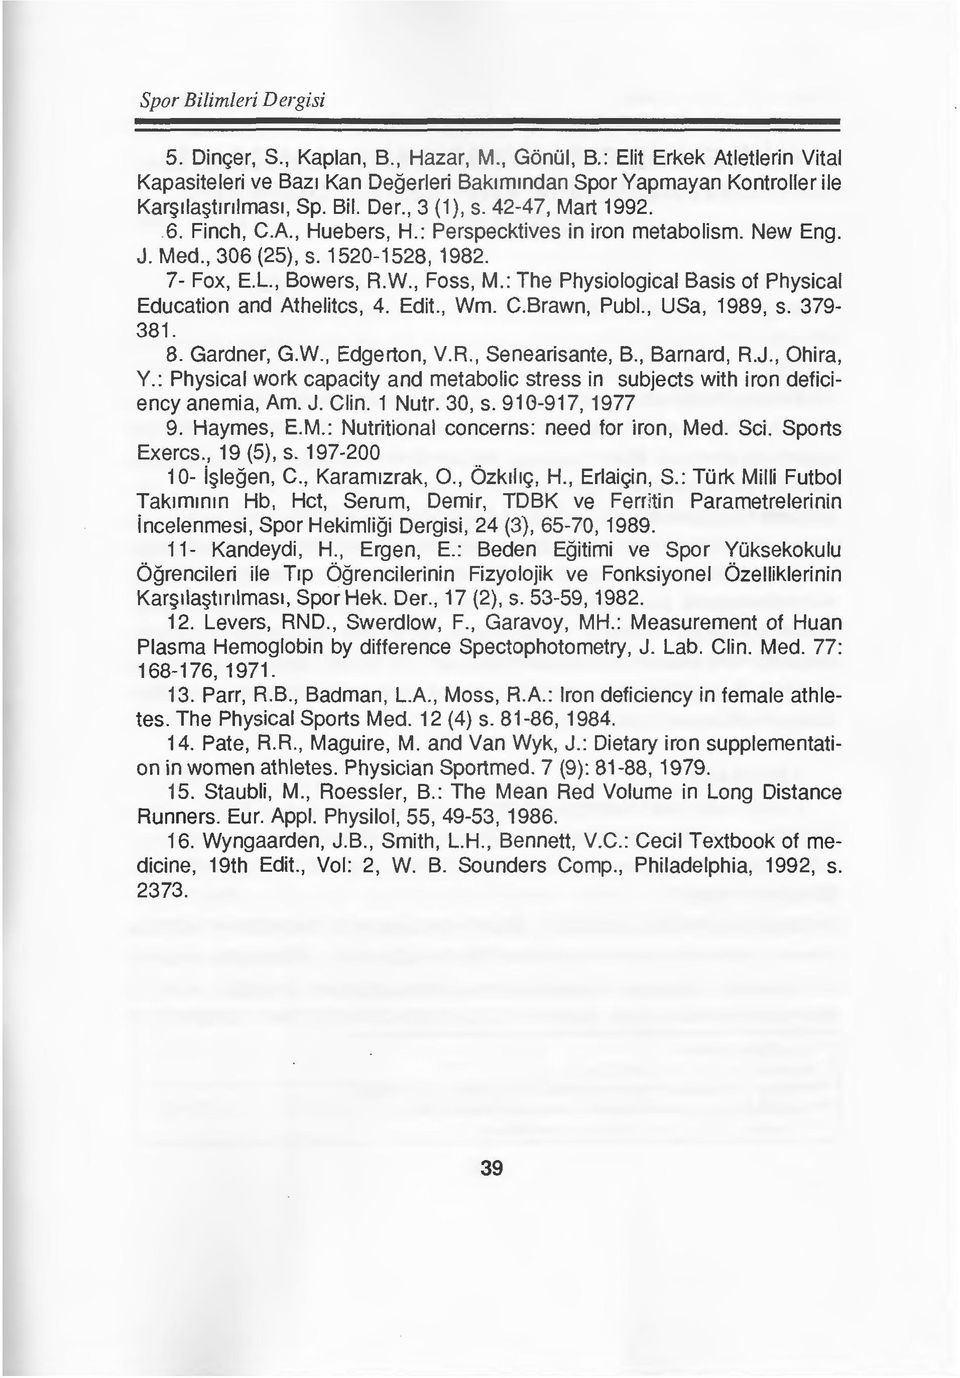 : The Physiological Basis of Physical Education and Athelitcs, 4. Edit., Wm. C.Brawn, Publ., USa, 1989, s. 379-381. 8. Gardner, G.W., Edgerton, V.R., Senearisante, B., Barnard, R.J., Ohira, Y.